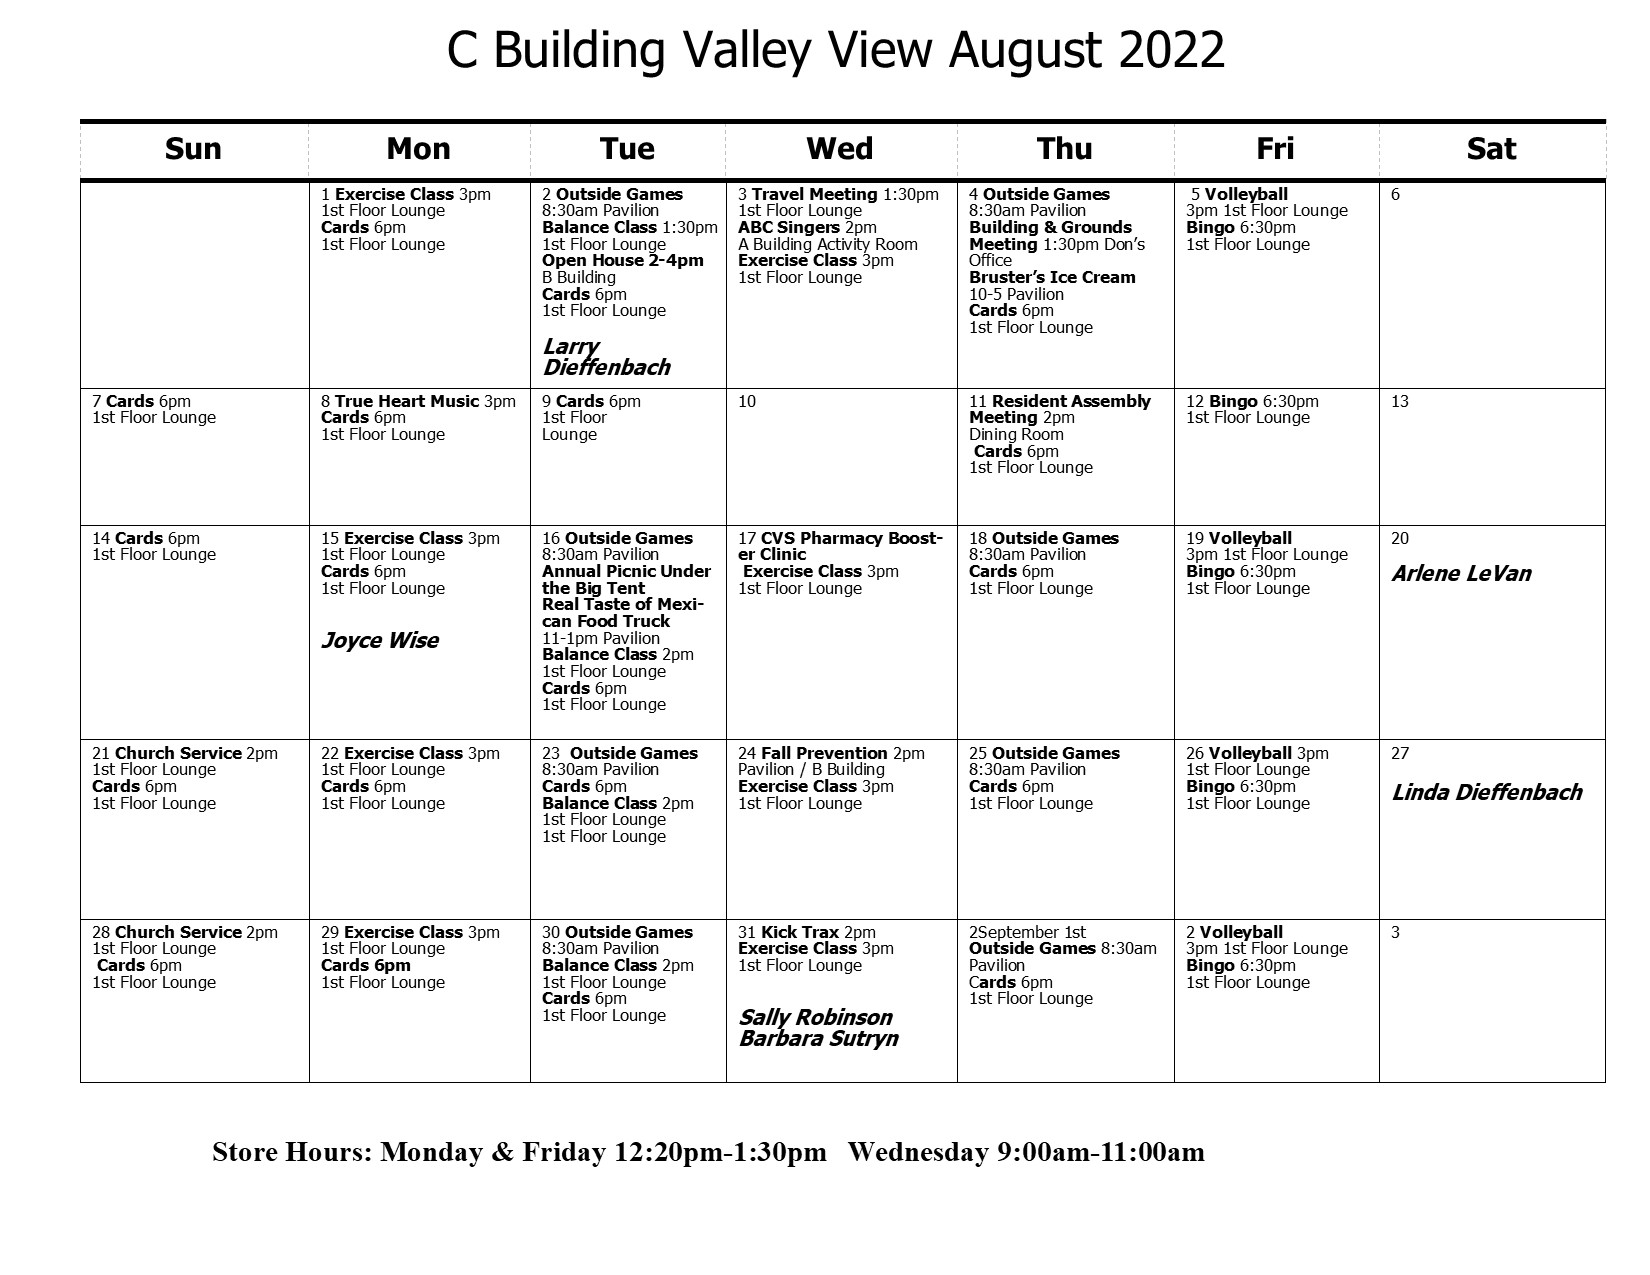 C Calendar August 2022